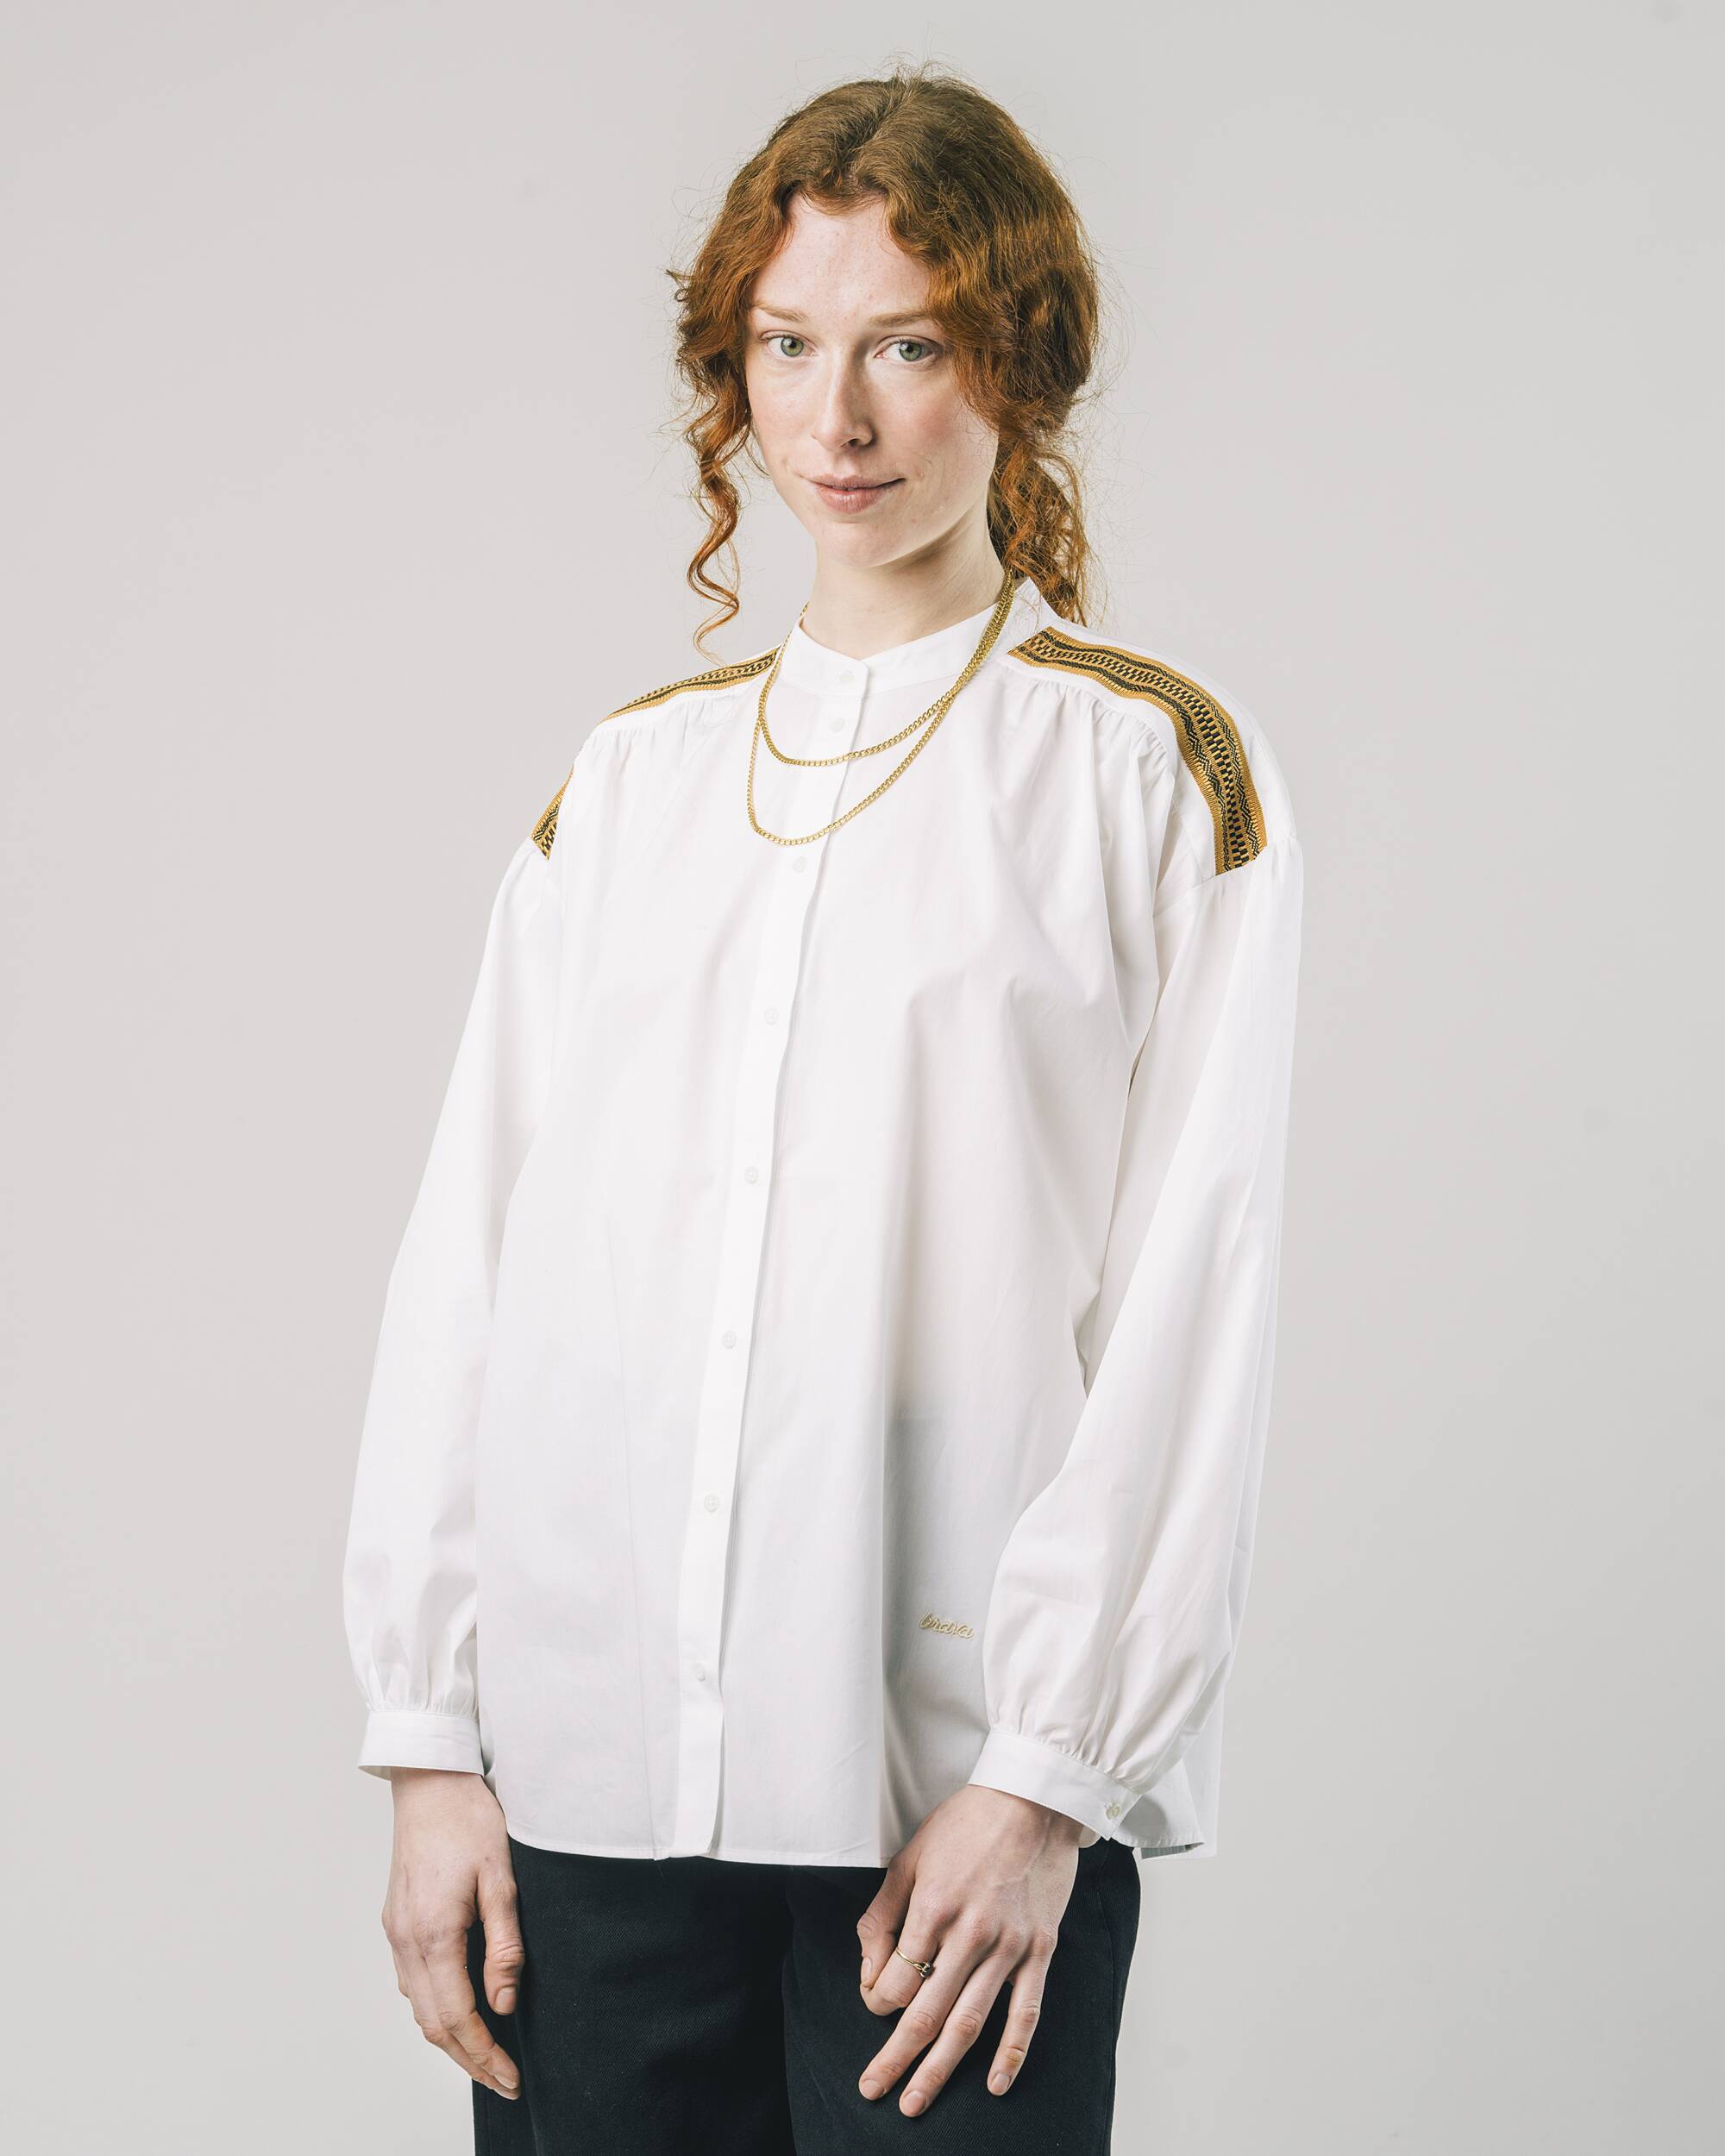 Oversized blouse "Ribbon Boho" in off-white / beige made of 100% organic cotton from Brava Fabrics